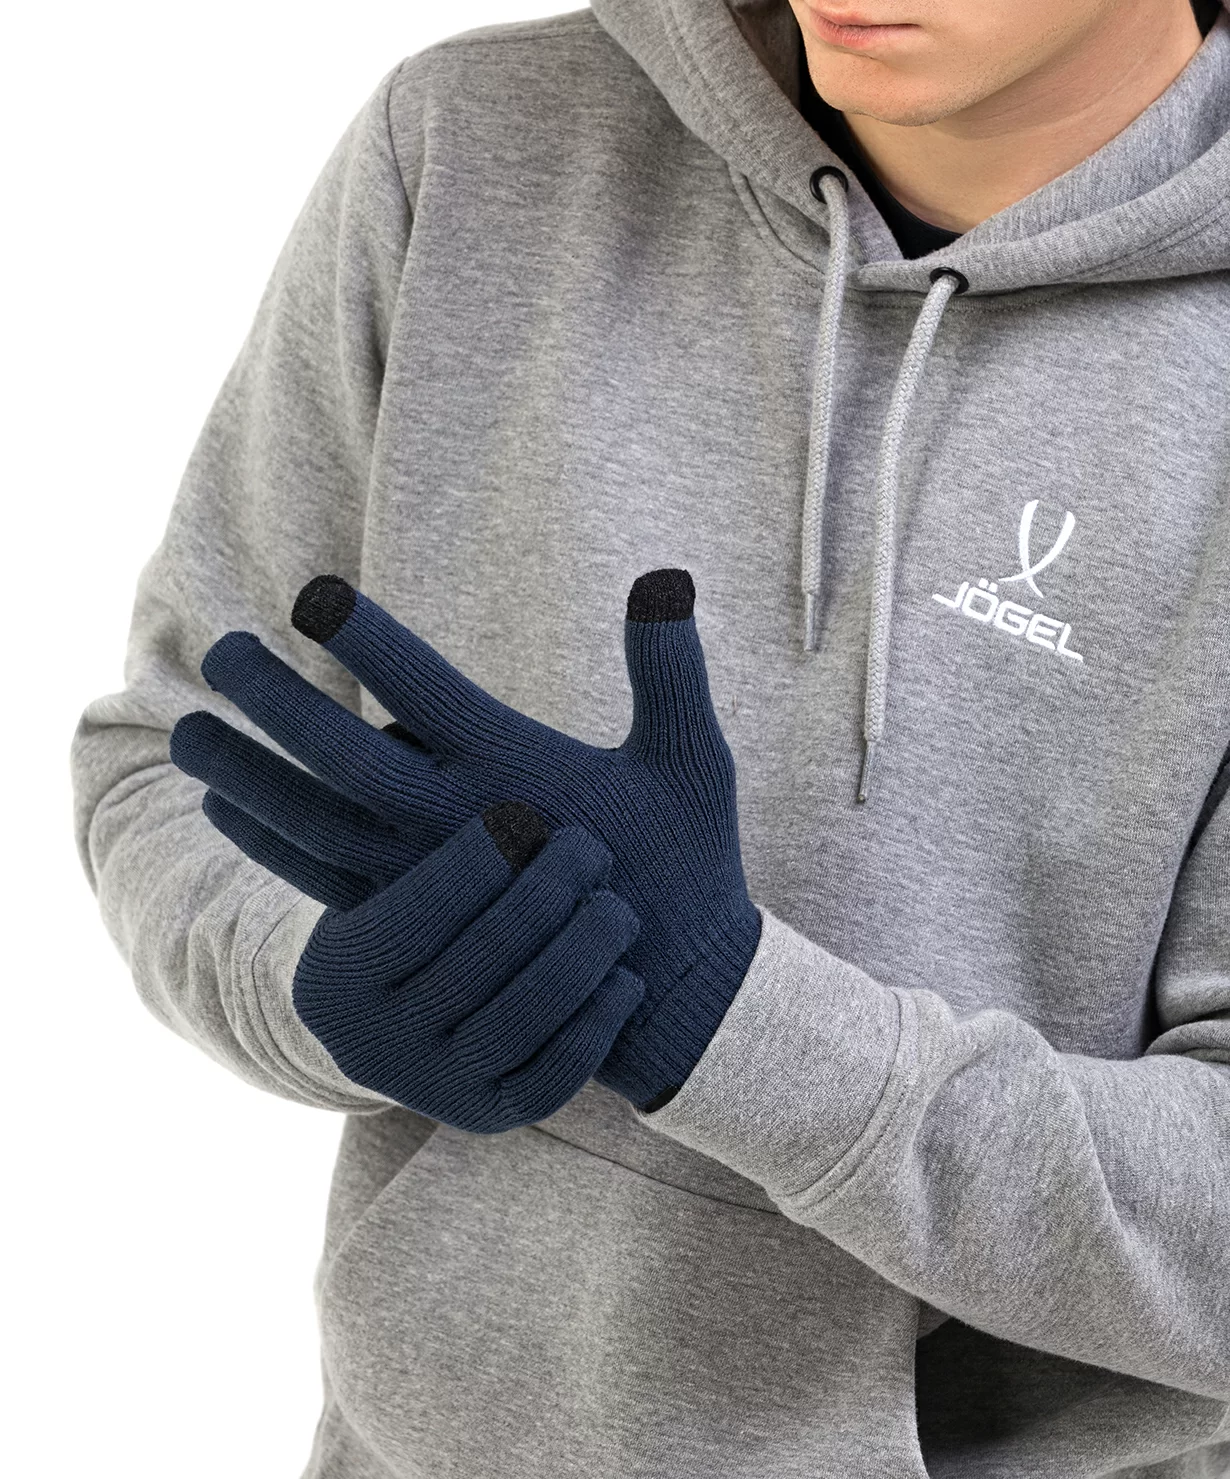 Фото Перчатки зимние ESSENTIAL Touch Gloves, темно-синий со склада магазина СпортСЕ